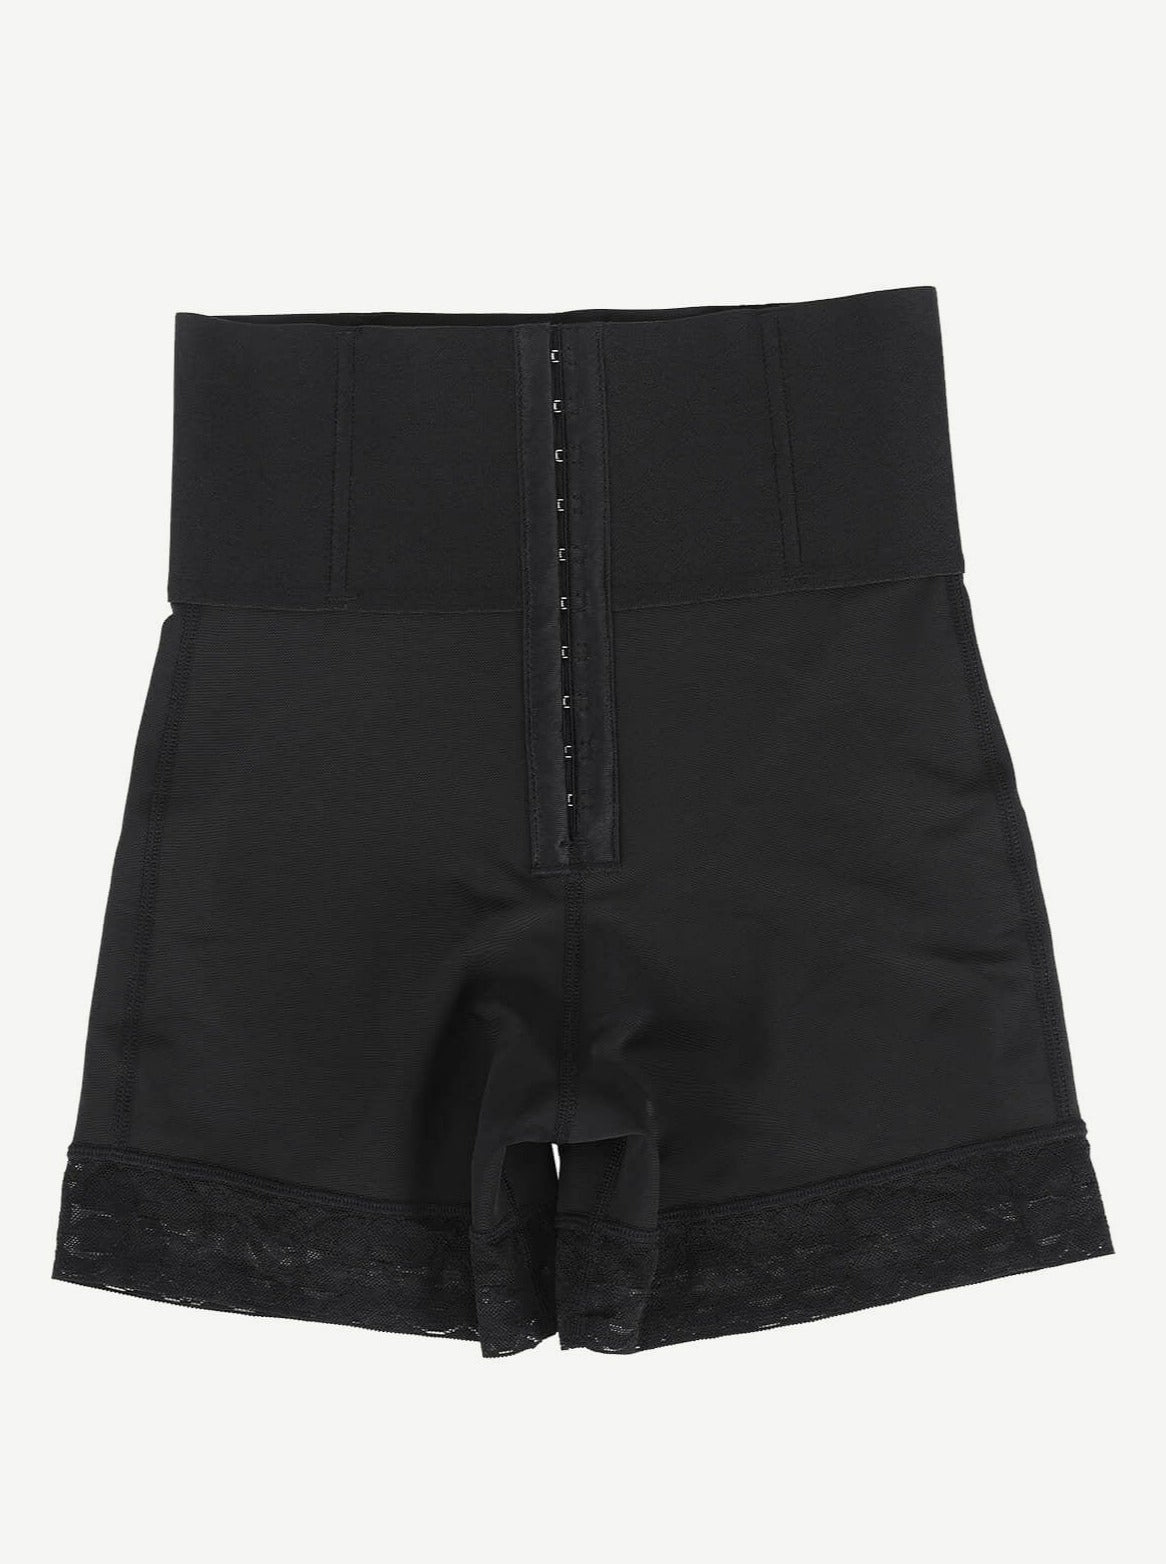 SHAPELLX Shaper Shorts Seamless High Waist Shape Shorts Women's Tummy  Control Thigh Control Butt Lift Shapewear with Removable Straps (Black-M/L)  - Yahoo Shopping